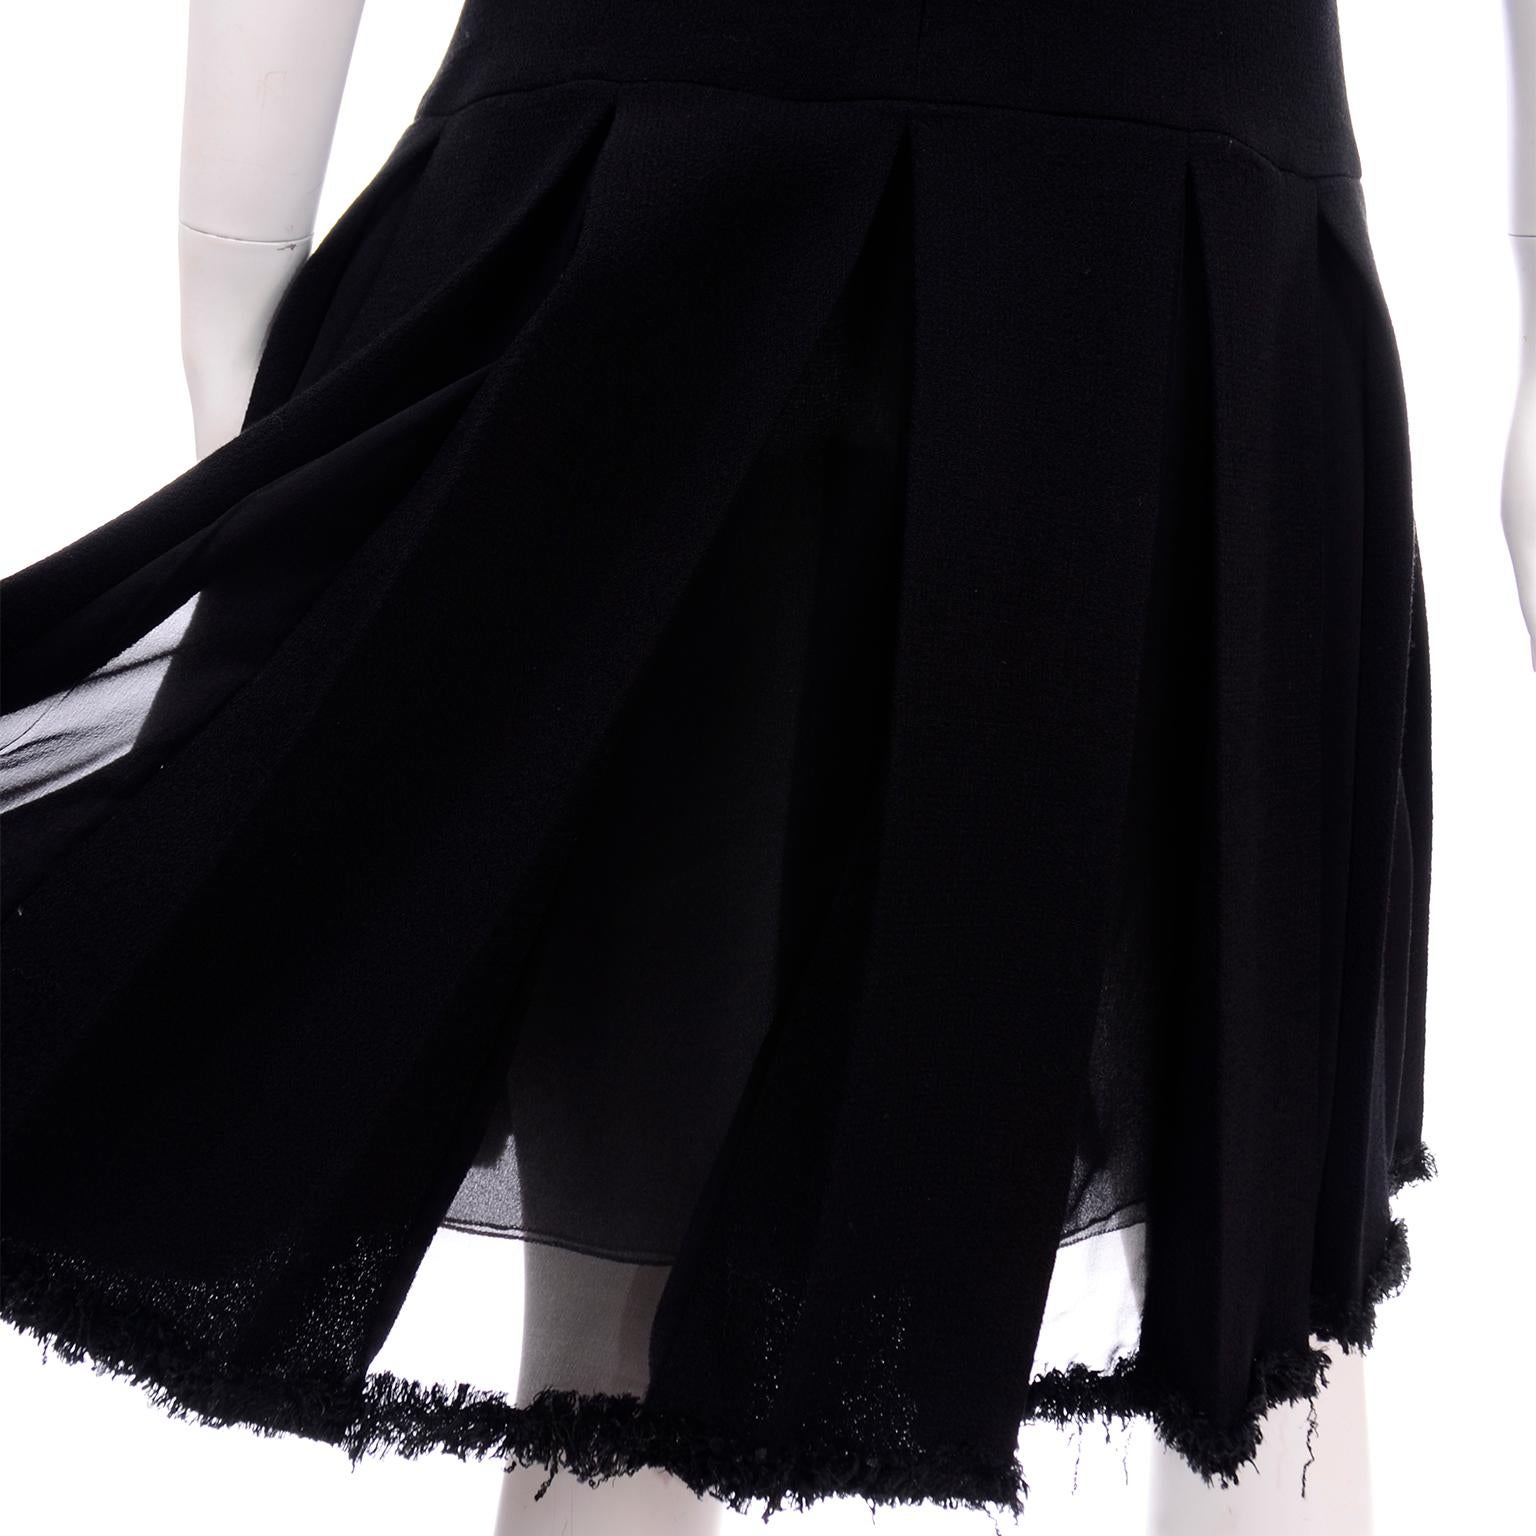 Oscar de la Renta Fall 2010 Black Dress With Raw Edges & Sheer Panel Pleating For Sale 4